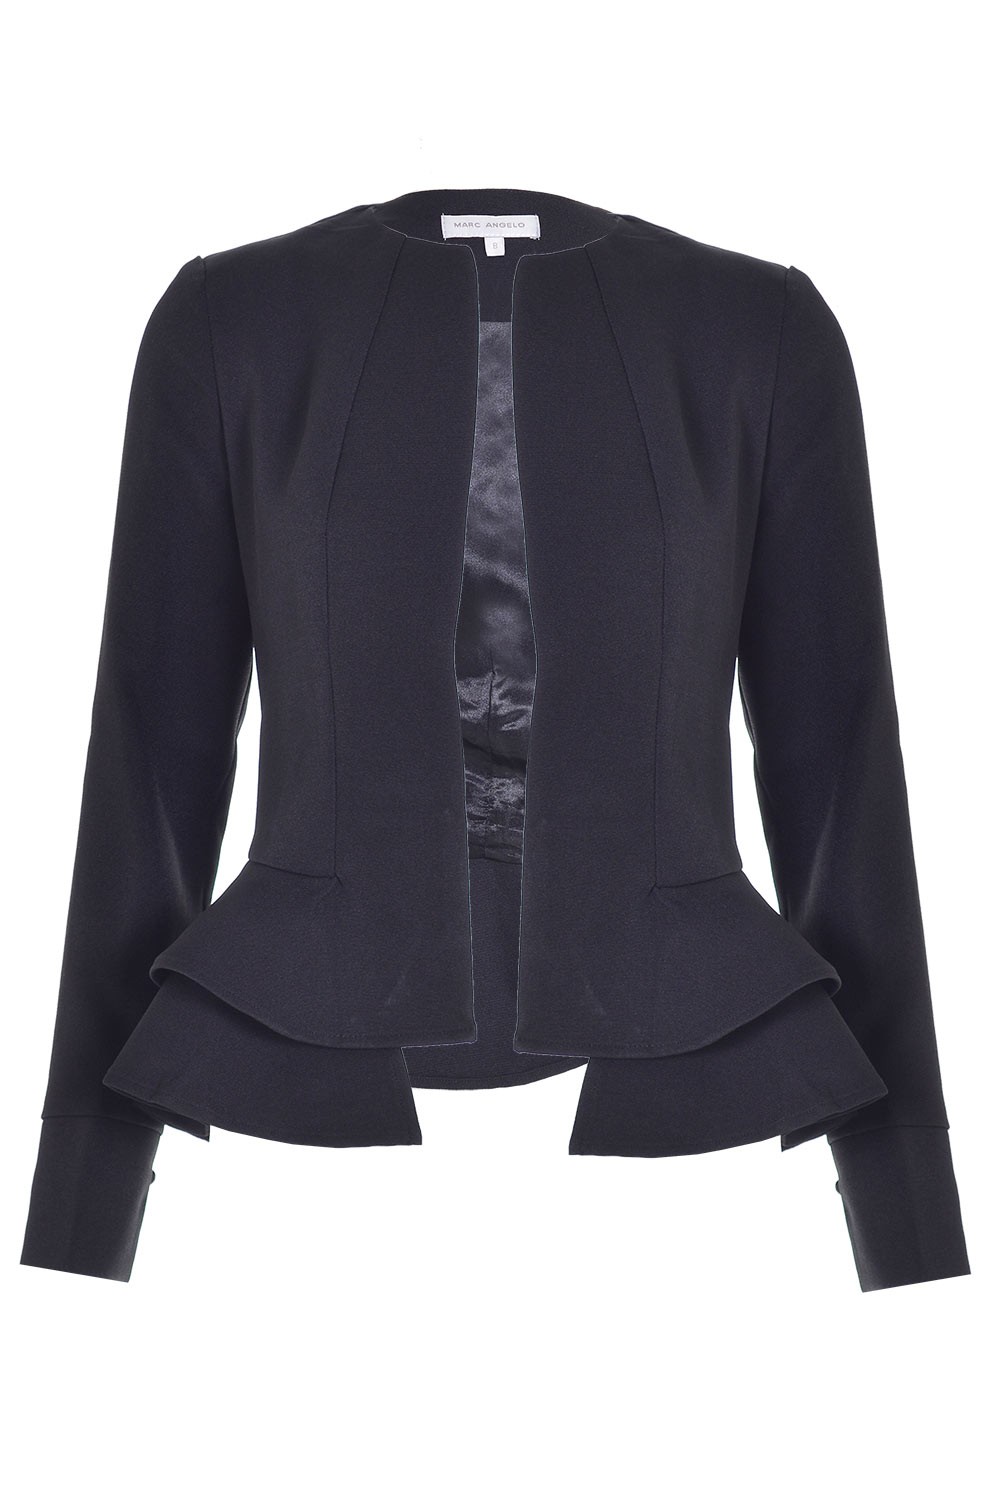 Marc Angelo Lana Frill Jacket in Black | iCLOTHING